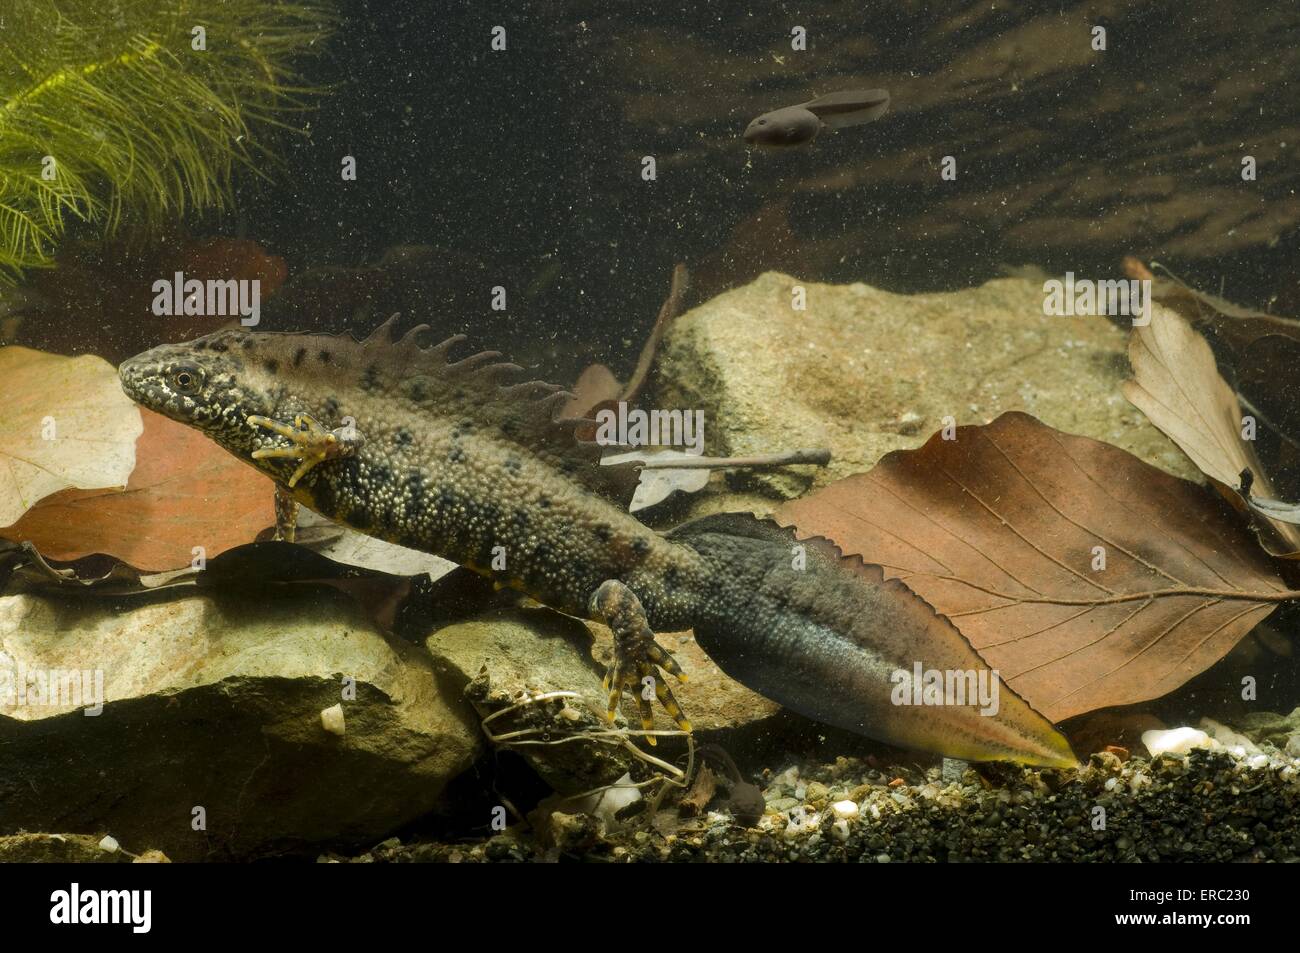 warty newt Stock Photo